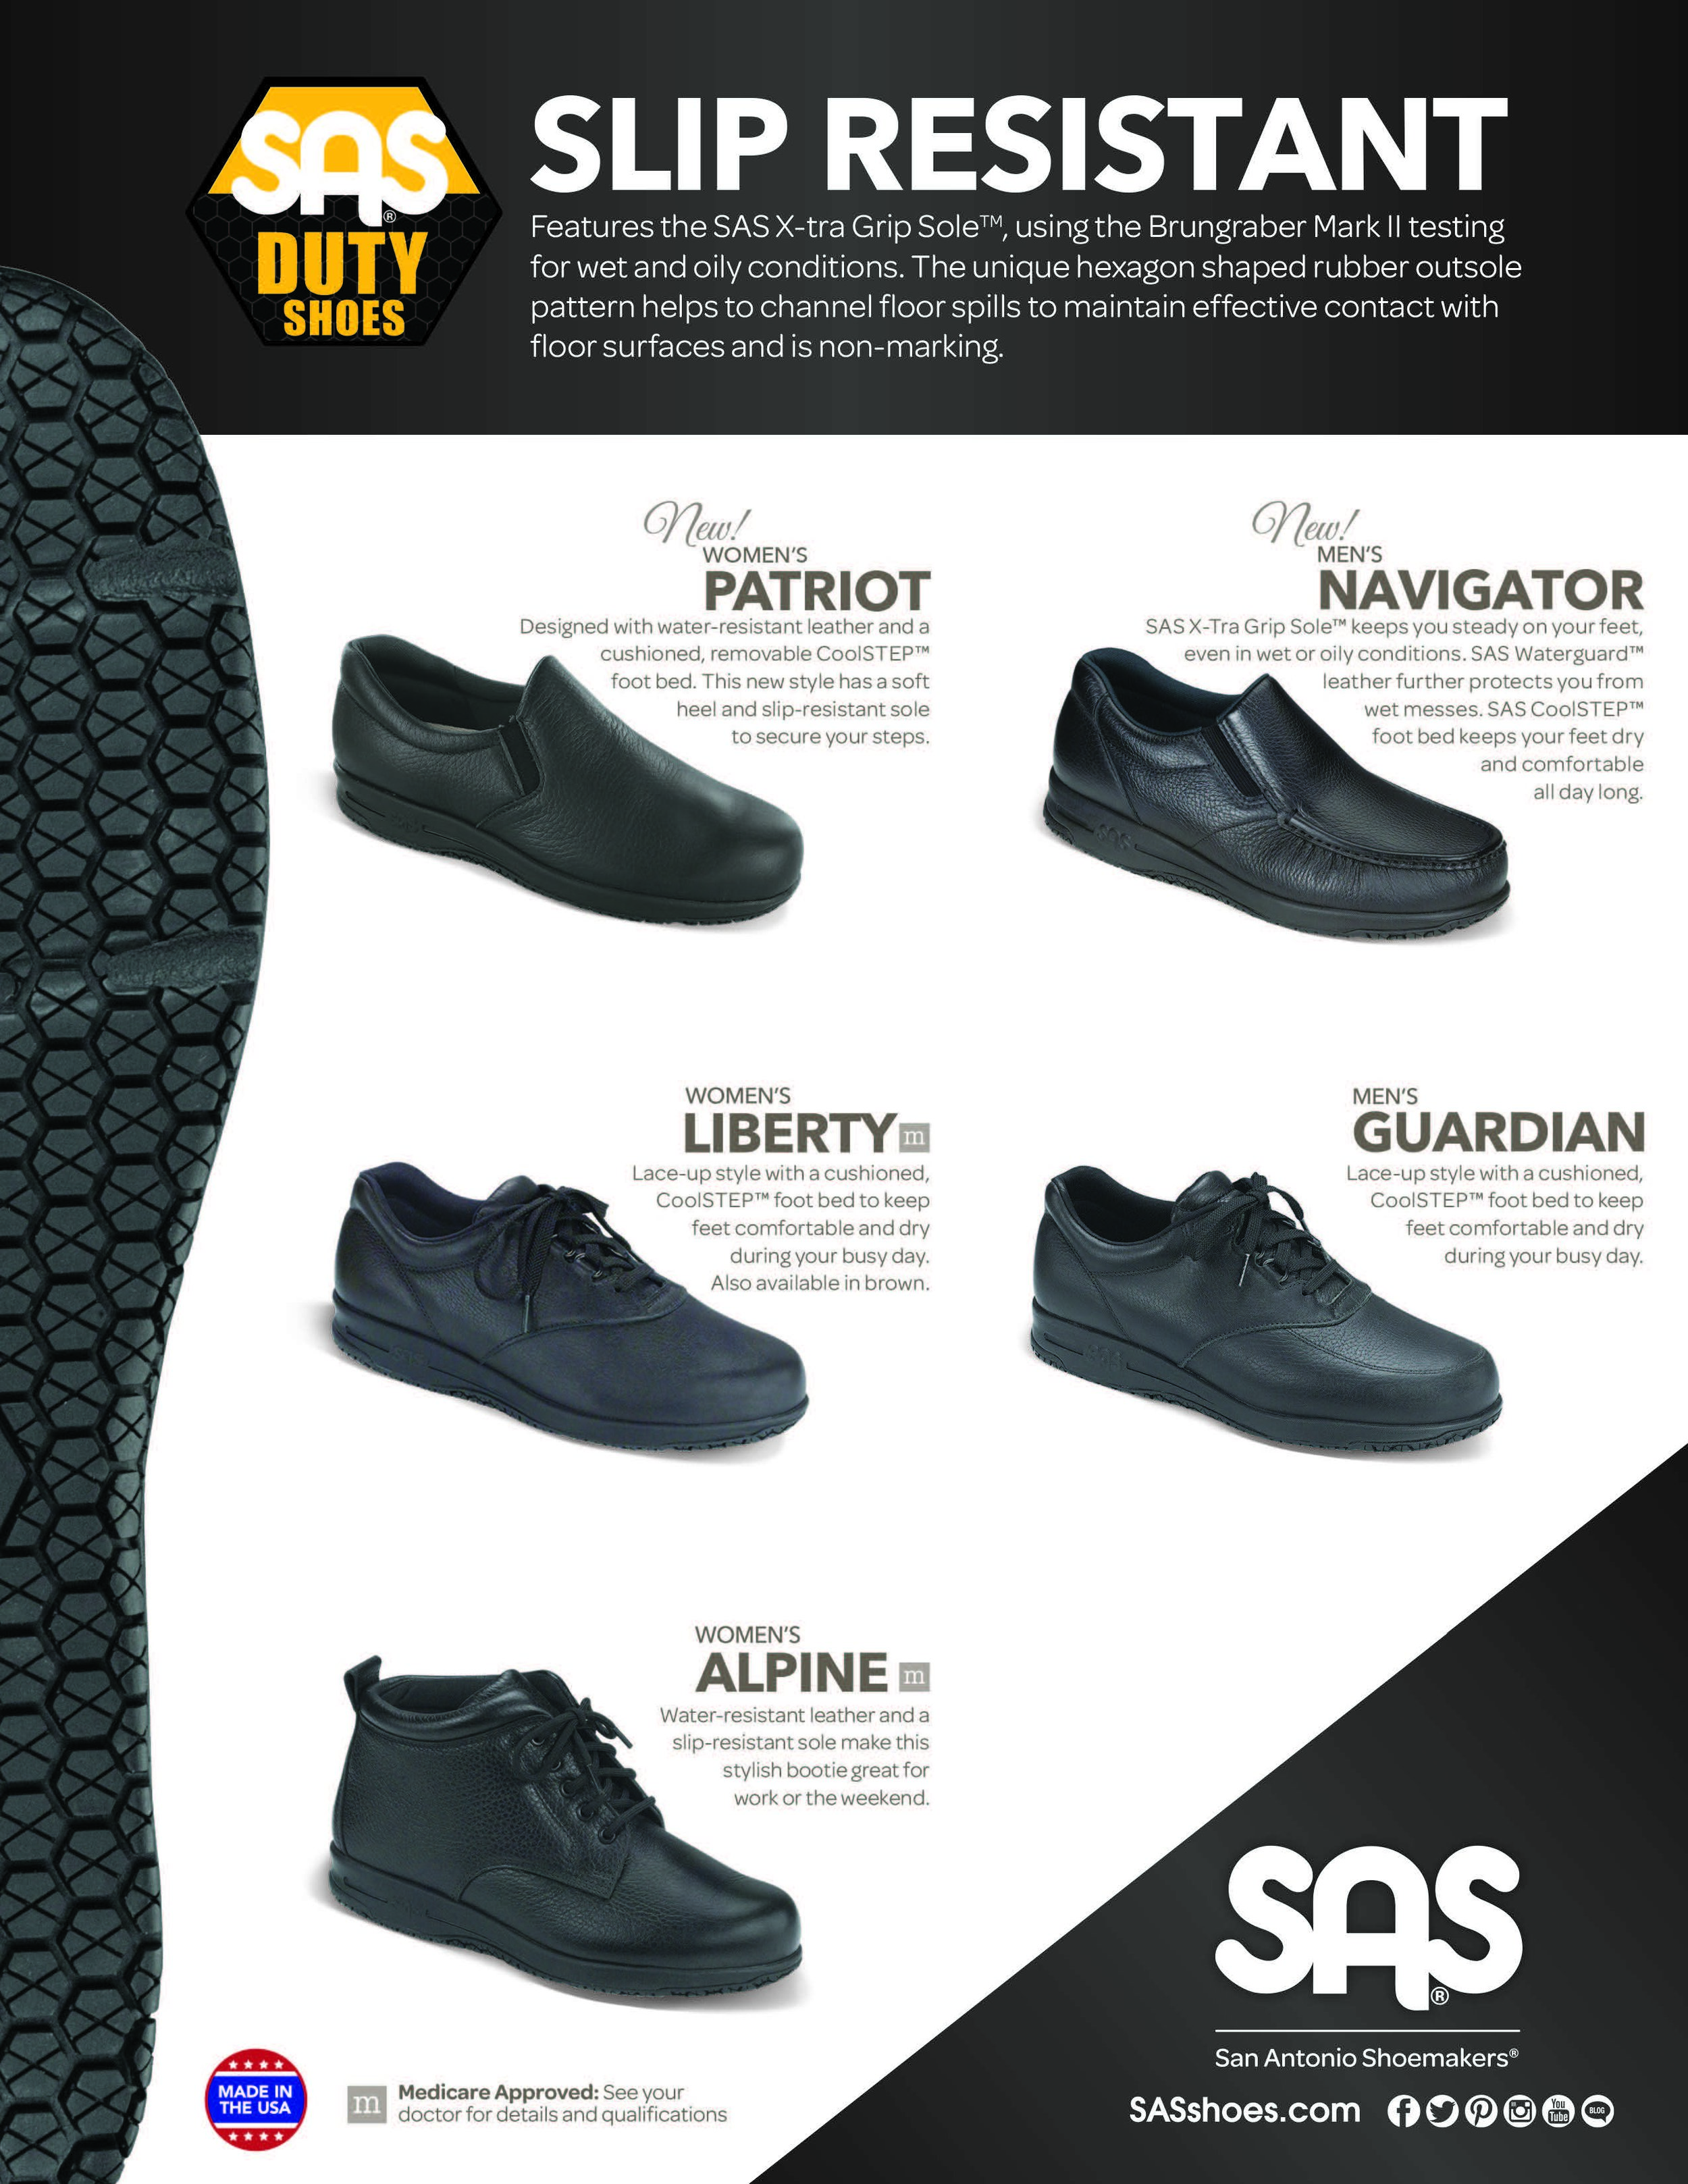 About — SAS Shoes Buffalo